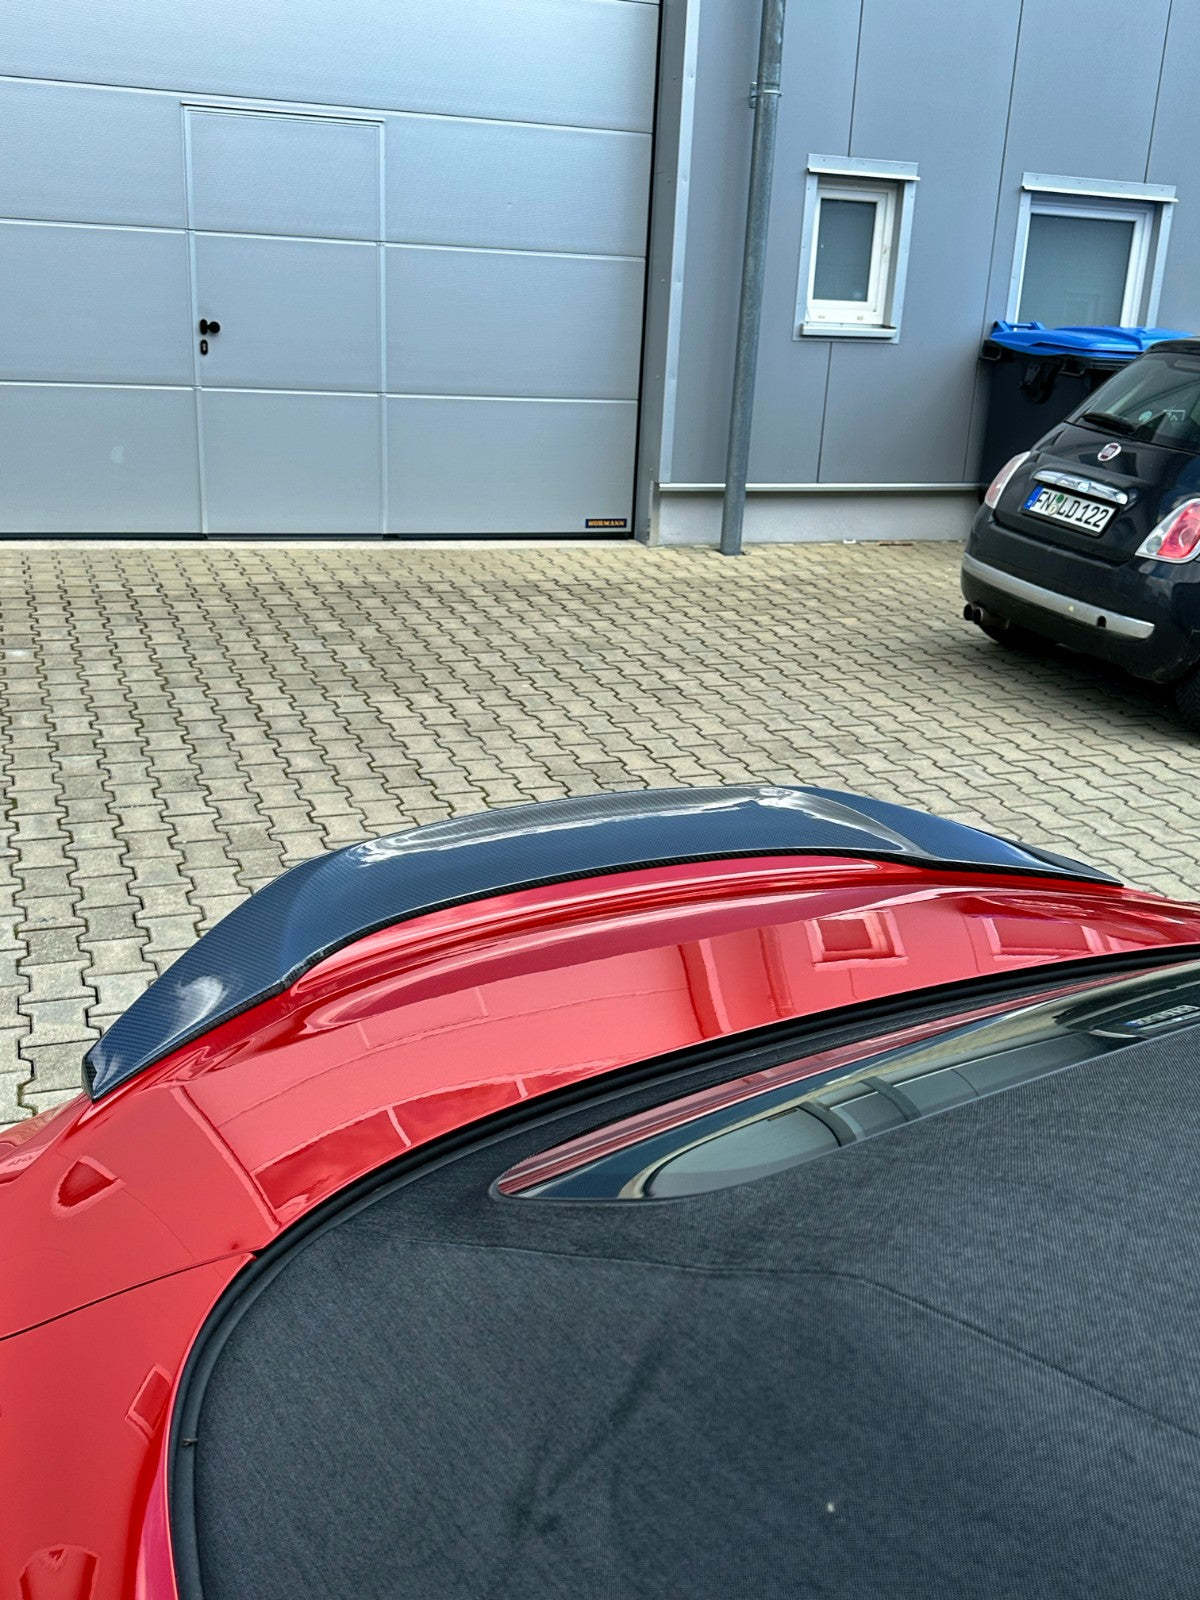 MAX CARBON Performance Abrisskannte Lippe Heckspoiler rear Spoiler für BMW G29 Z4 M40i Roadster